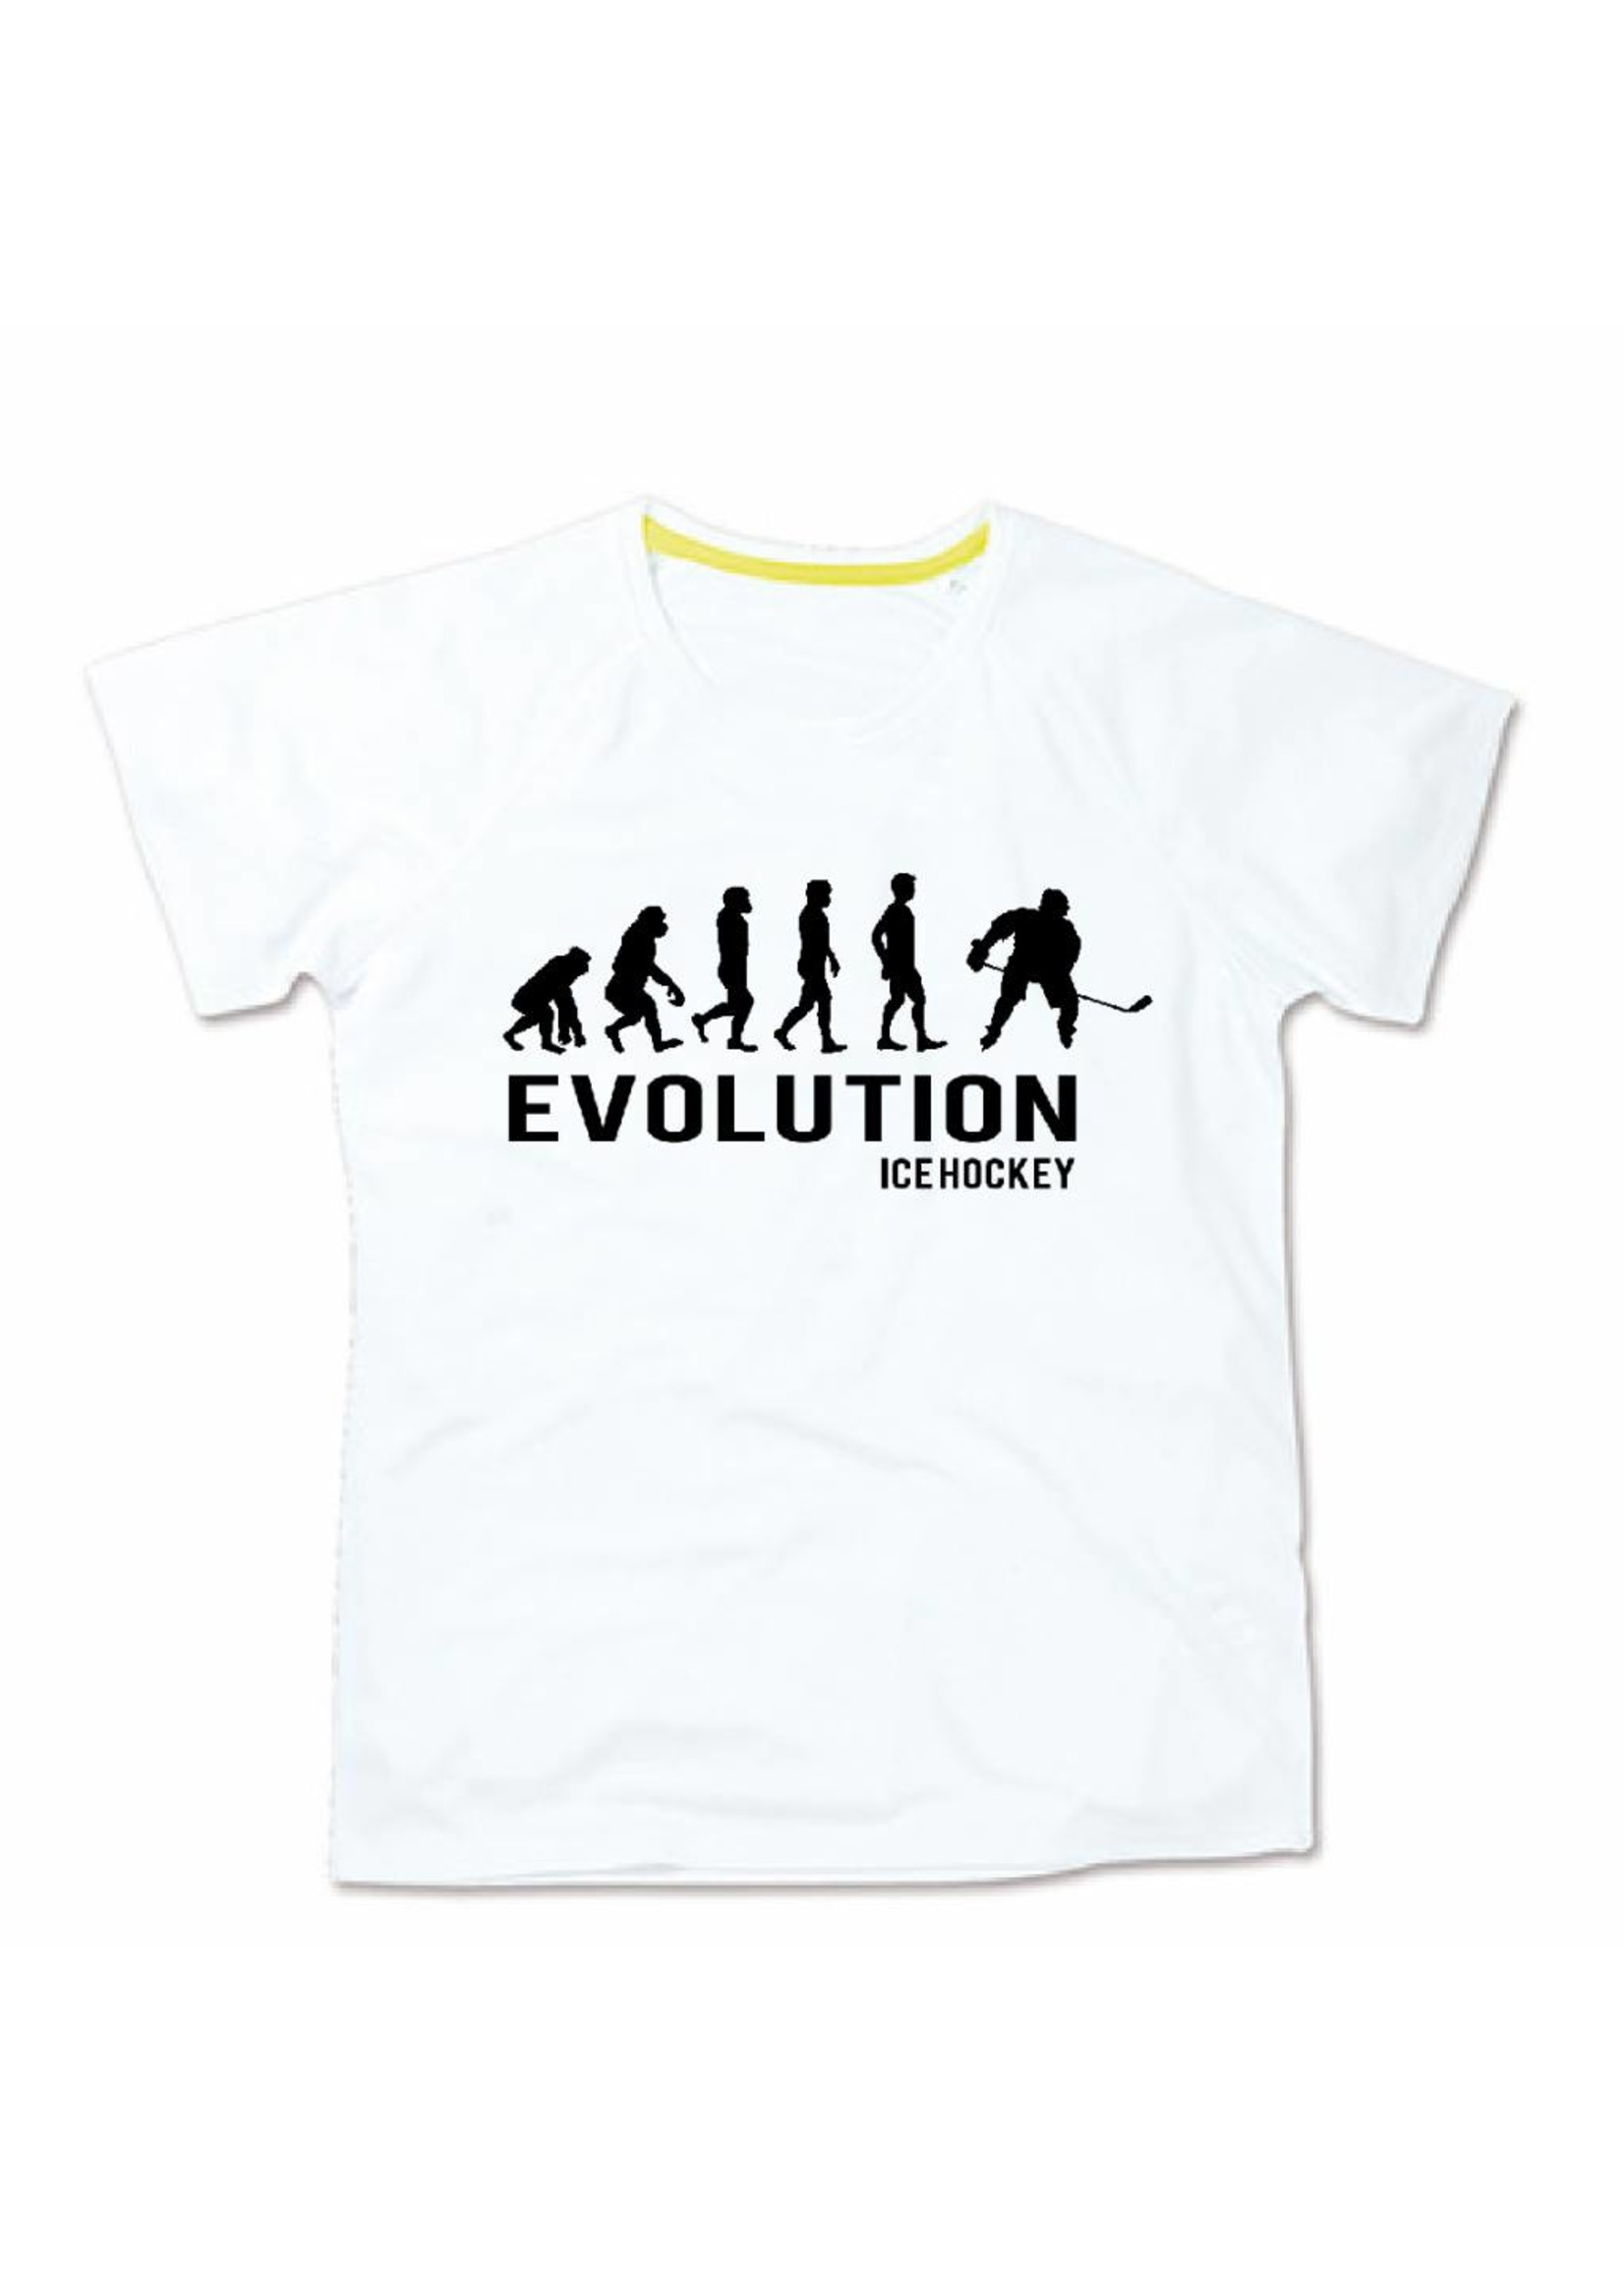 Evolution ice hockey - Sport shirt quick&dry